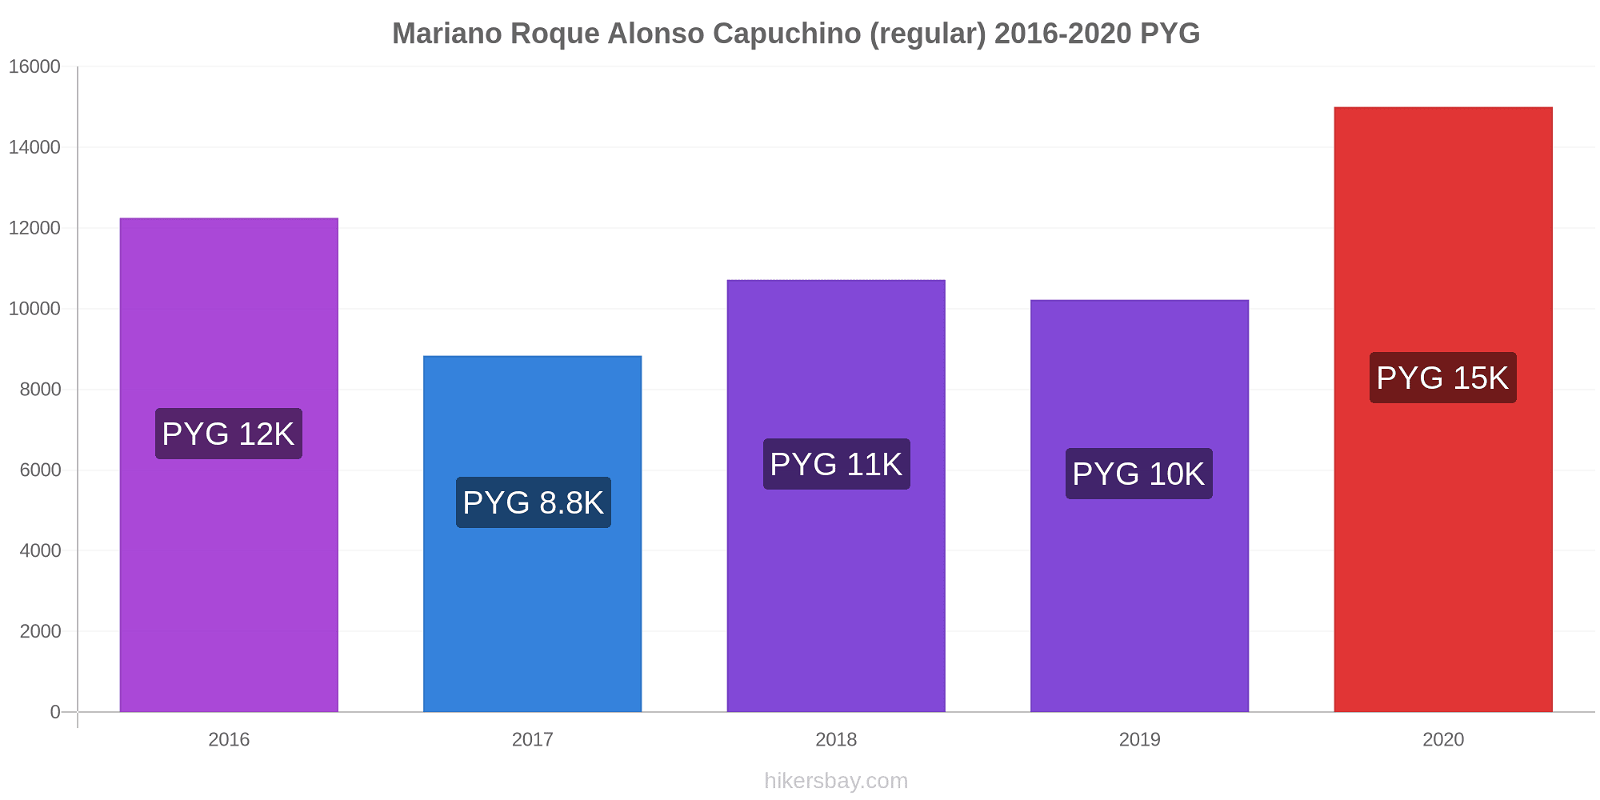 Mariano Roque Alonso cambios de precios Capuchino (regular) hikersbay.com